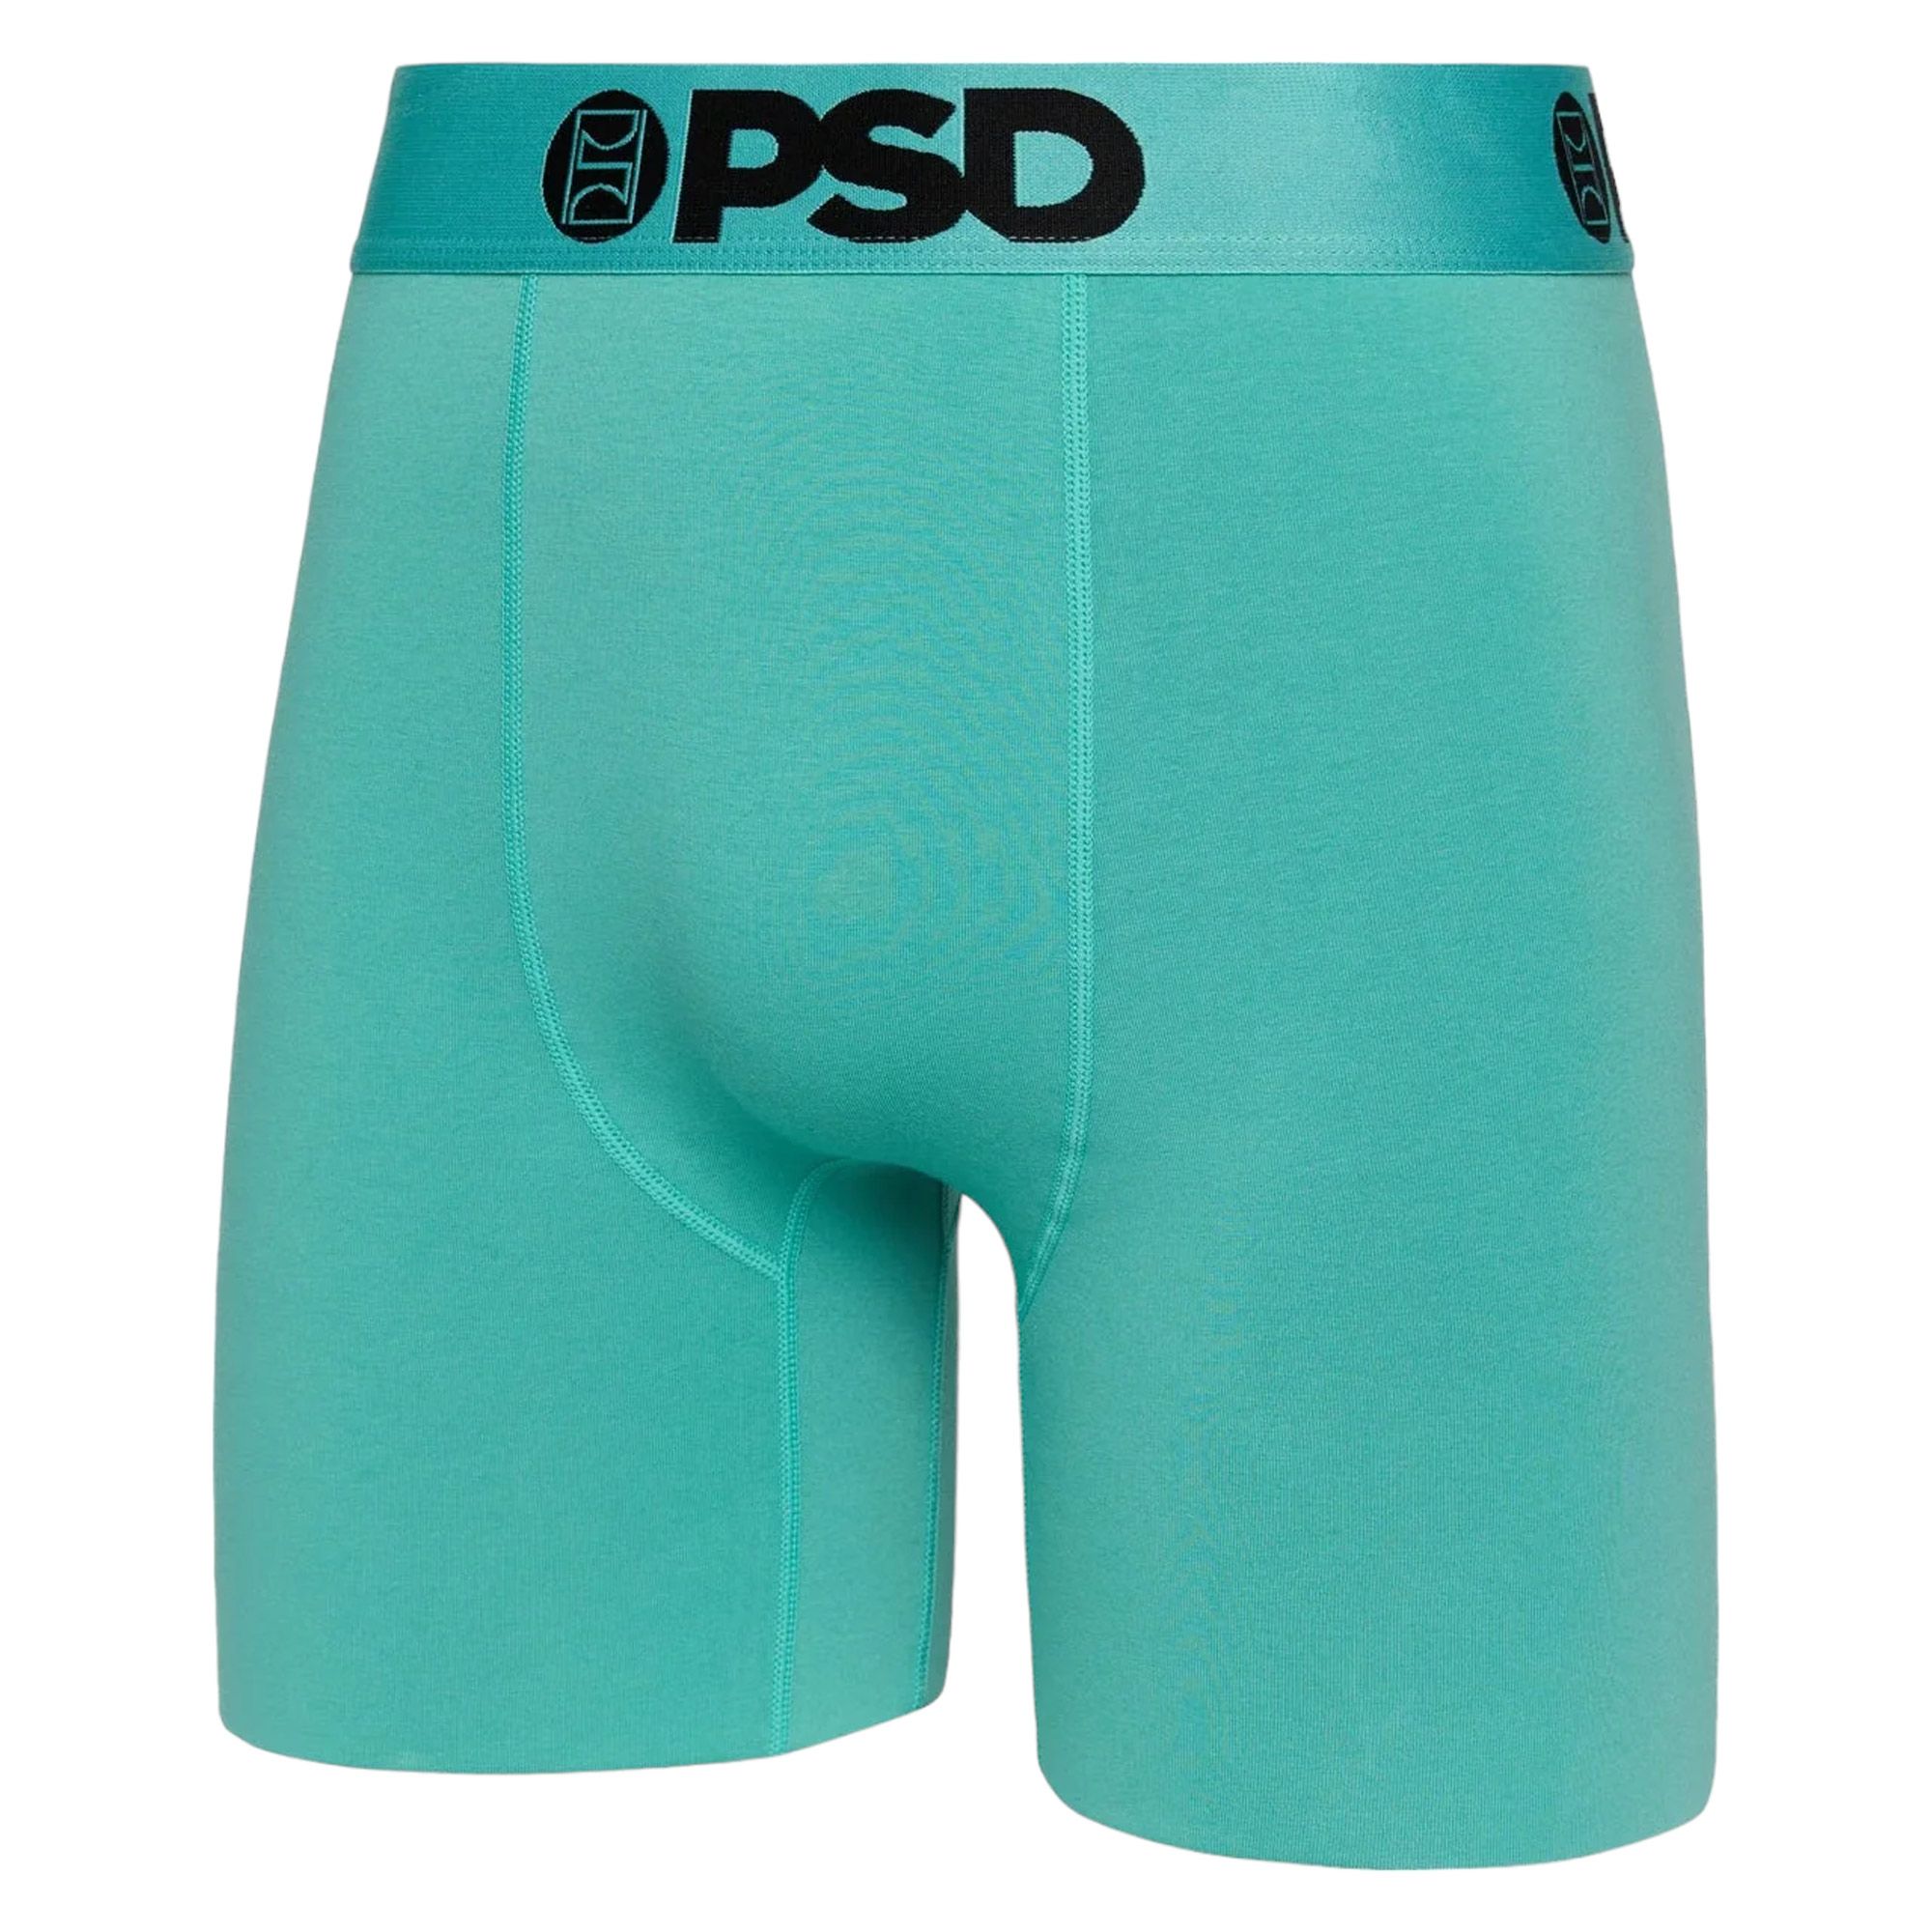 PSD Men's Multicolor Thermal Washed Money Boxer Briefs Underwear